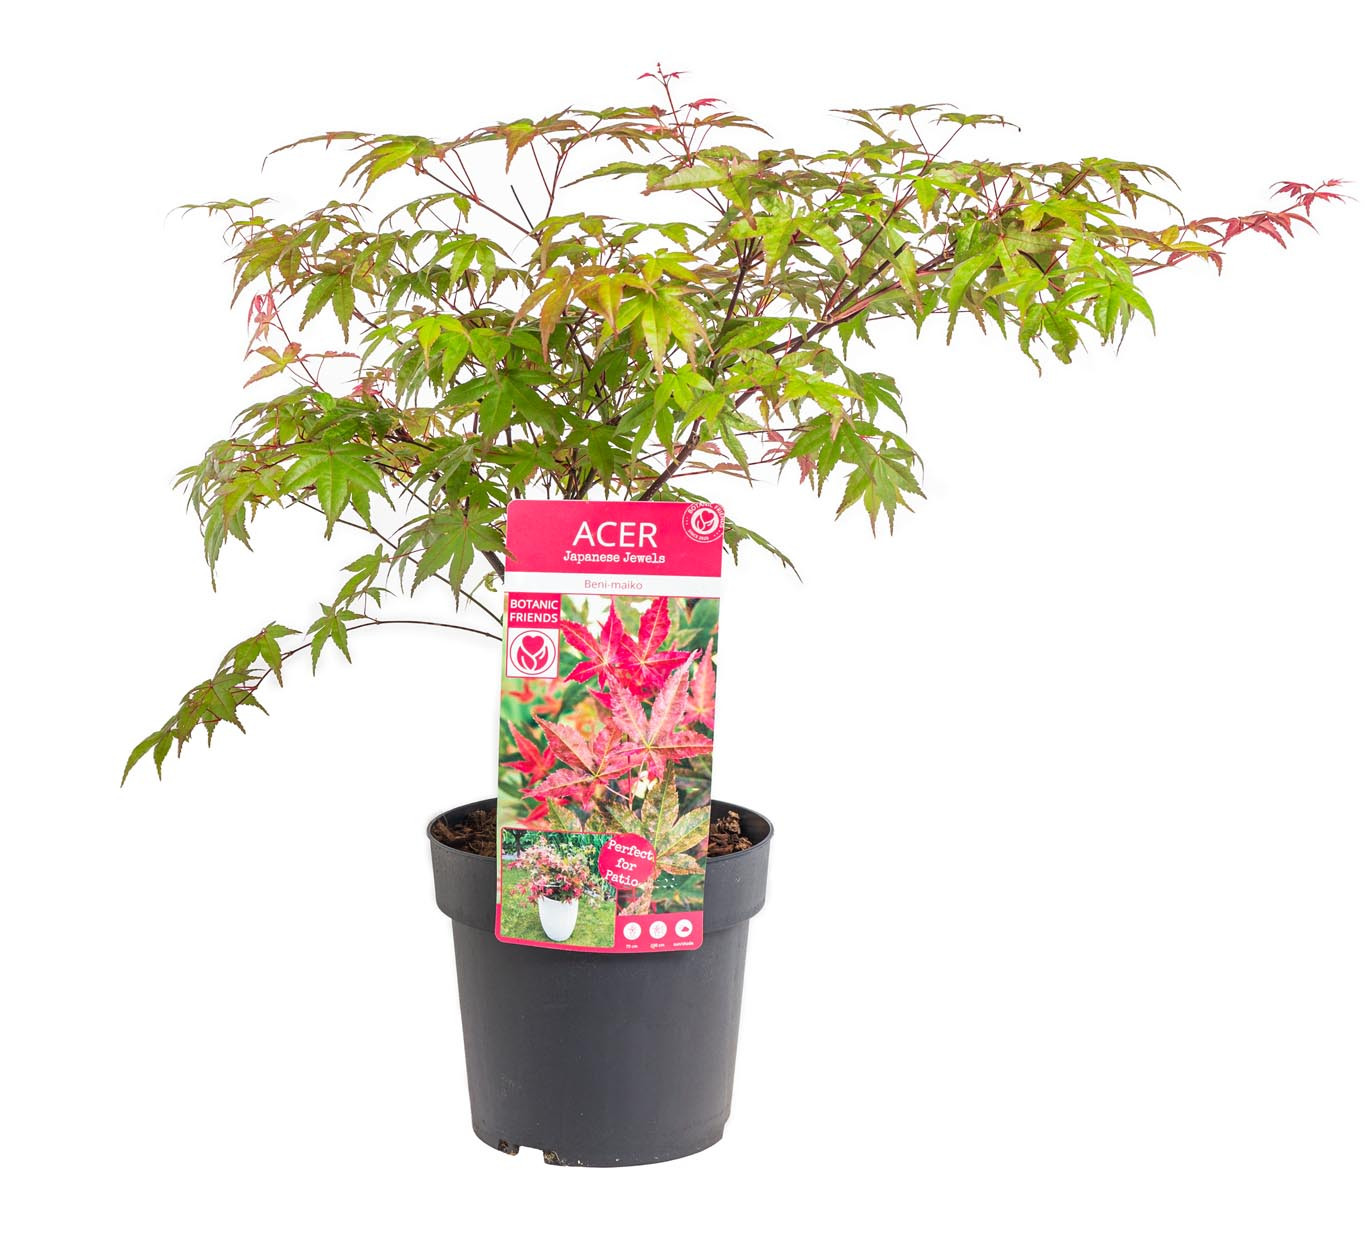 Javor japonský, Acer palmatum Beni - maiko, 3 l, skladem | ZAZUMi.cz